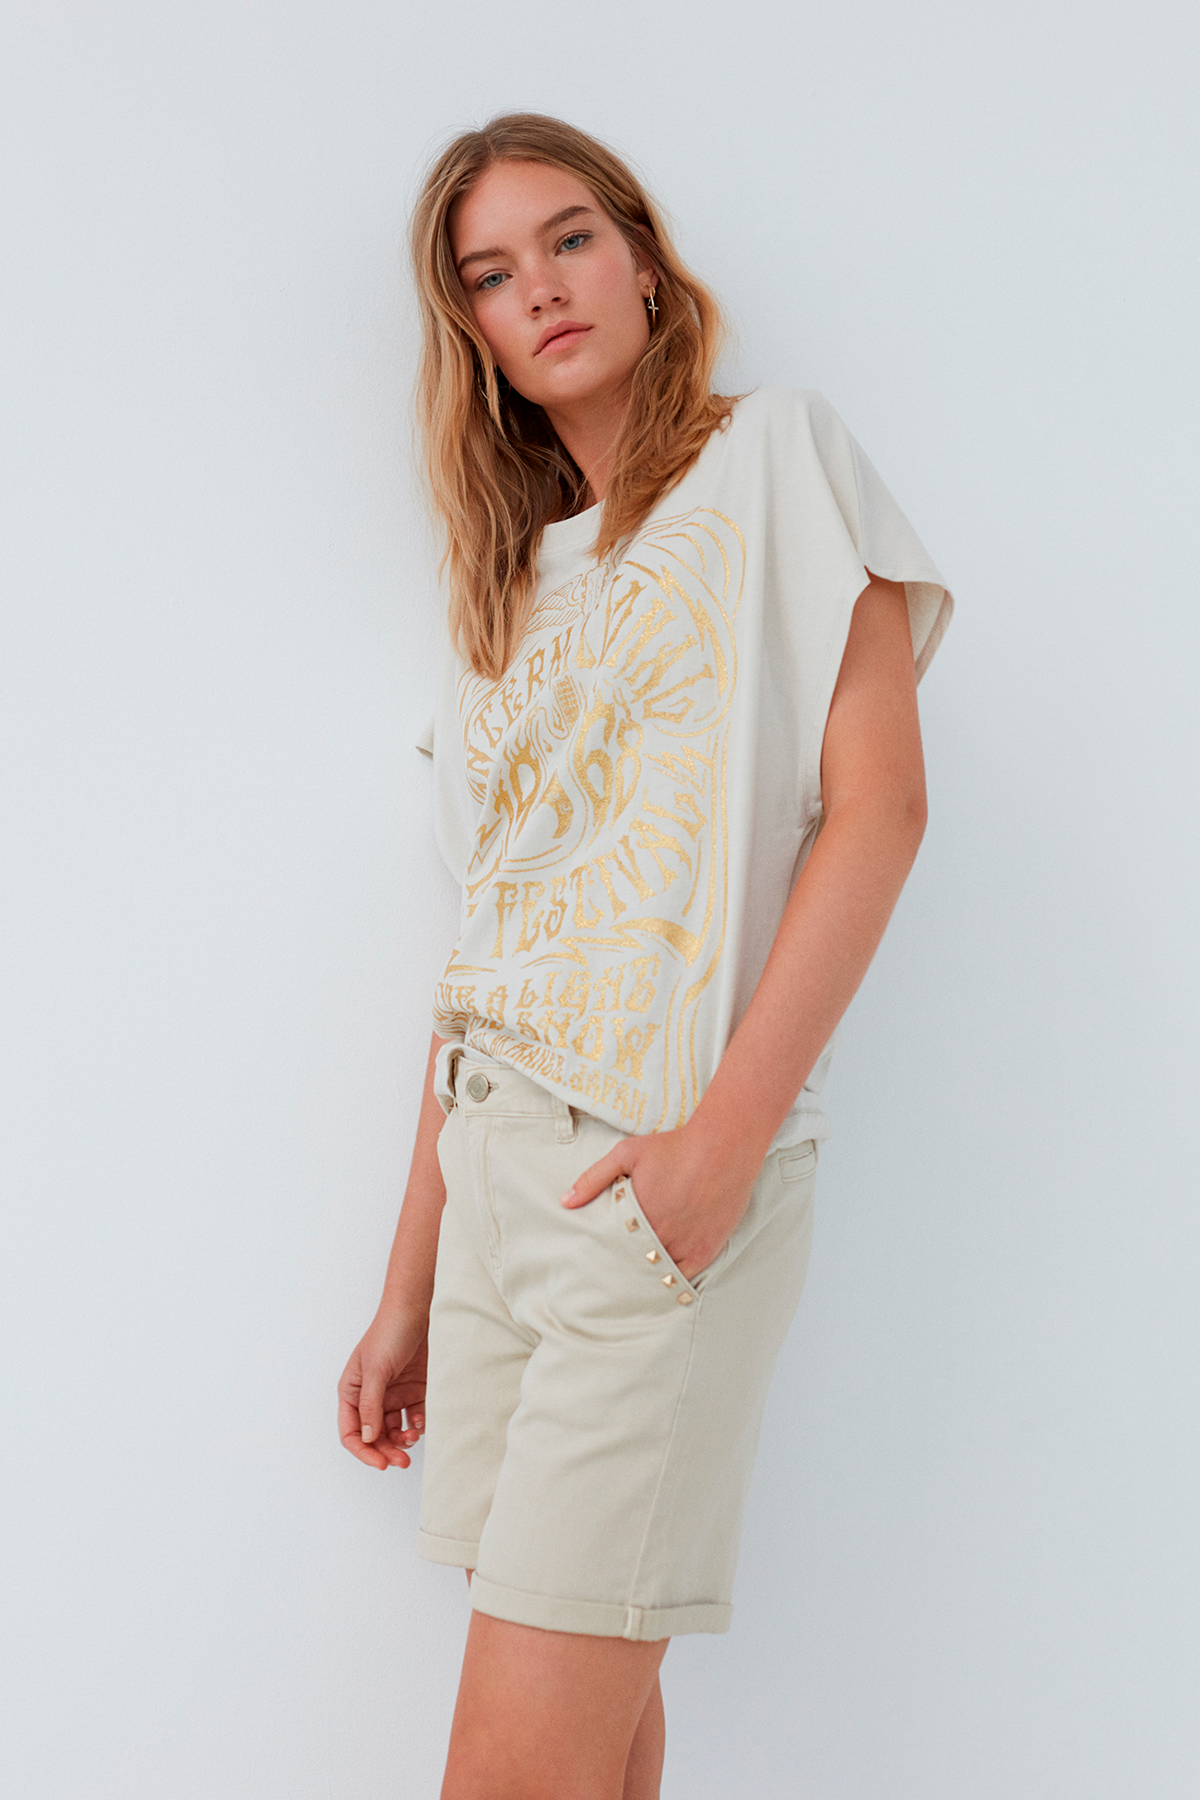 Sofie Schnoor T-shirt S, Farve: Hvid, Størrelse: XS, Dame